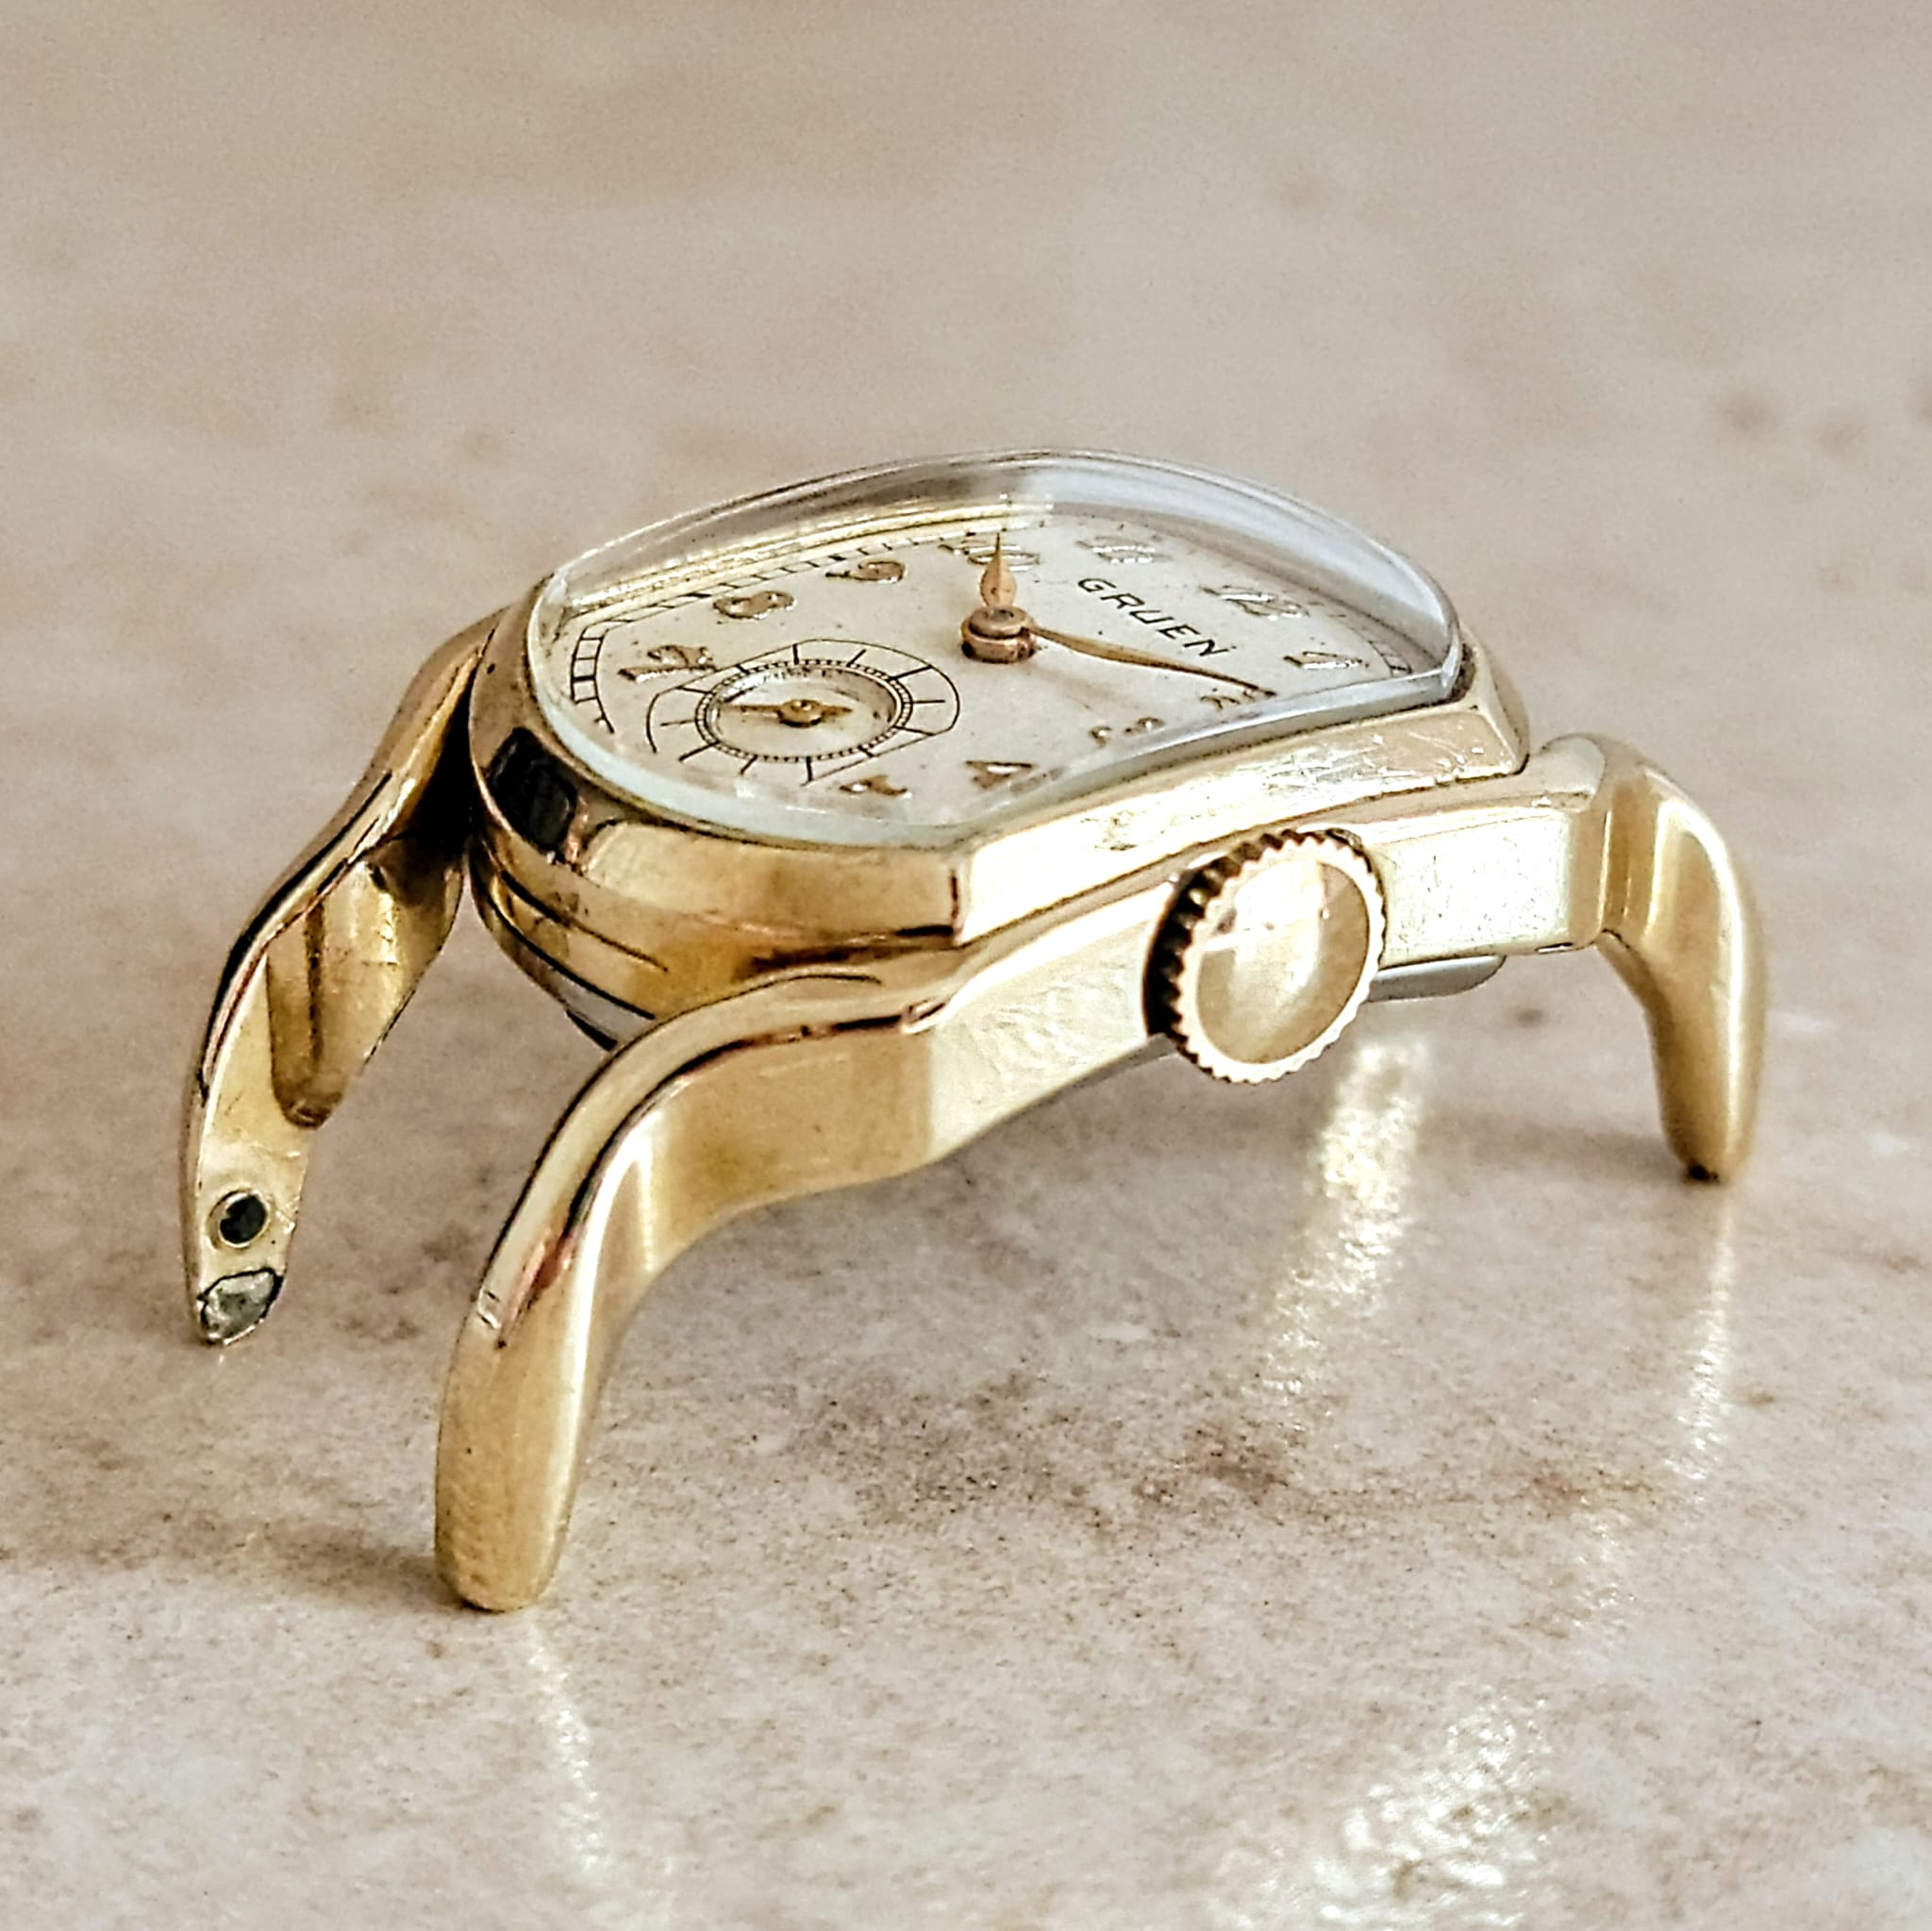 1939 GRUEN Driver’s Ristside “The Varsity” Wristwatch Curved Watch